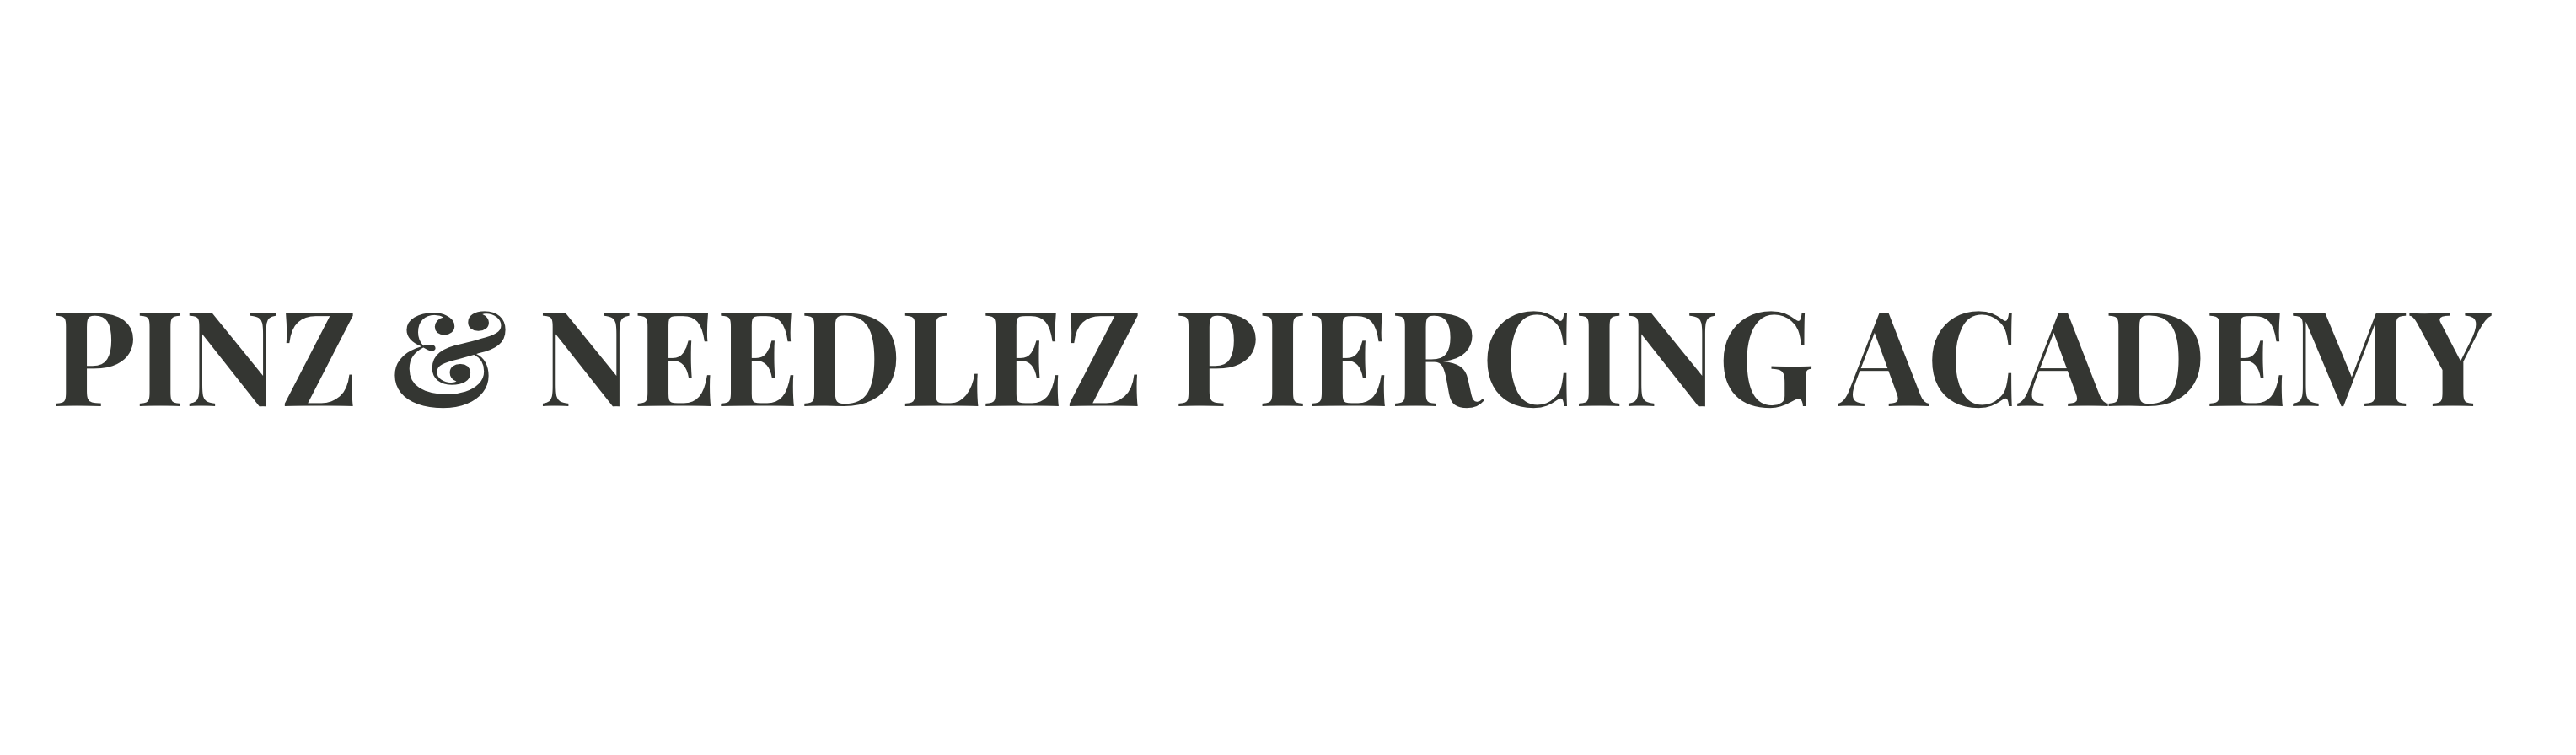 Pinz & Needlez Piercing Academy logo